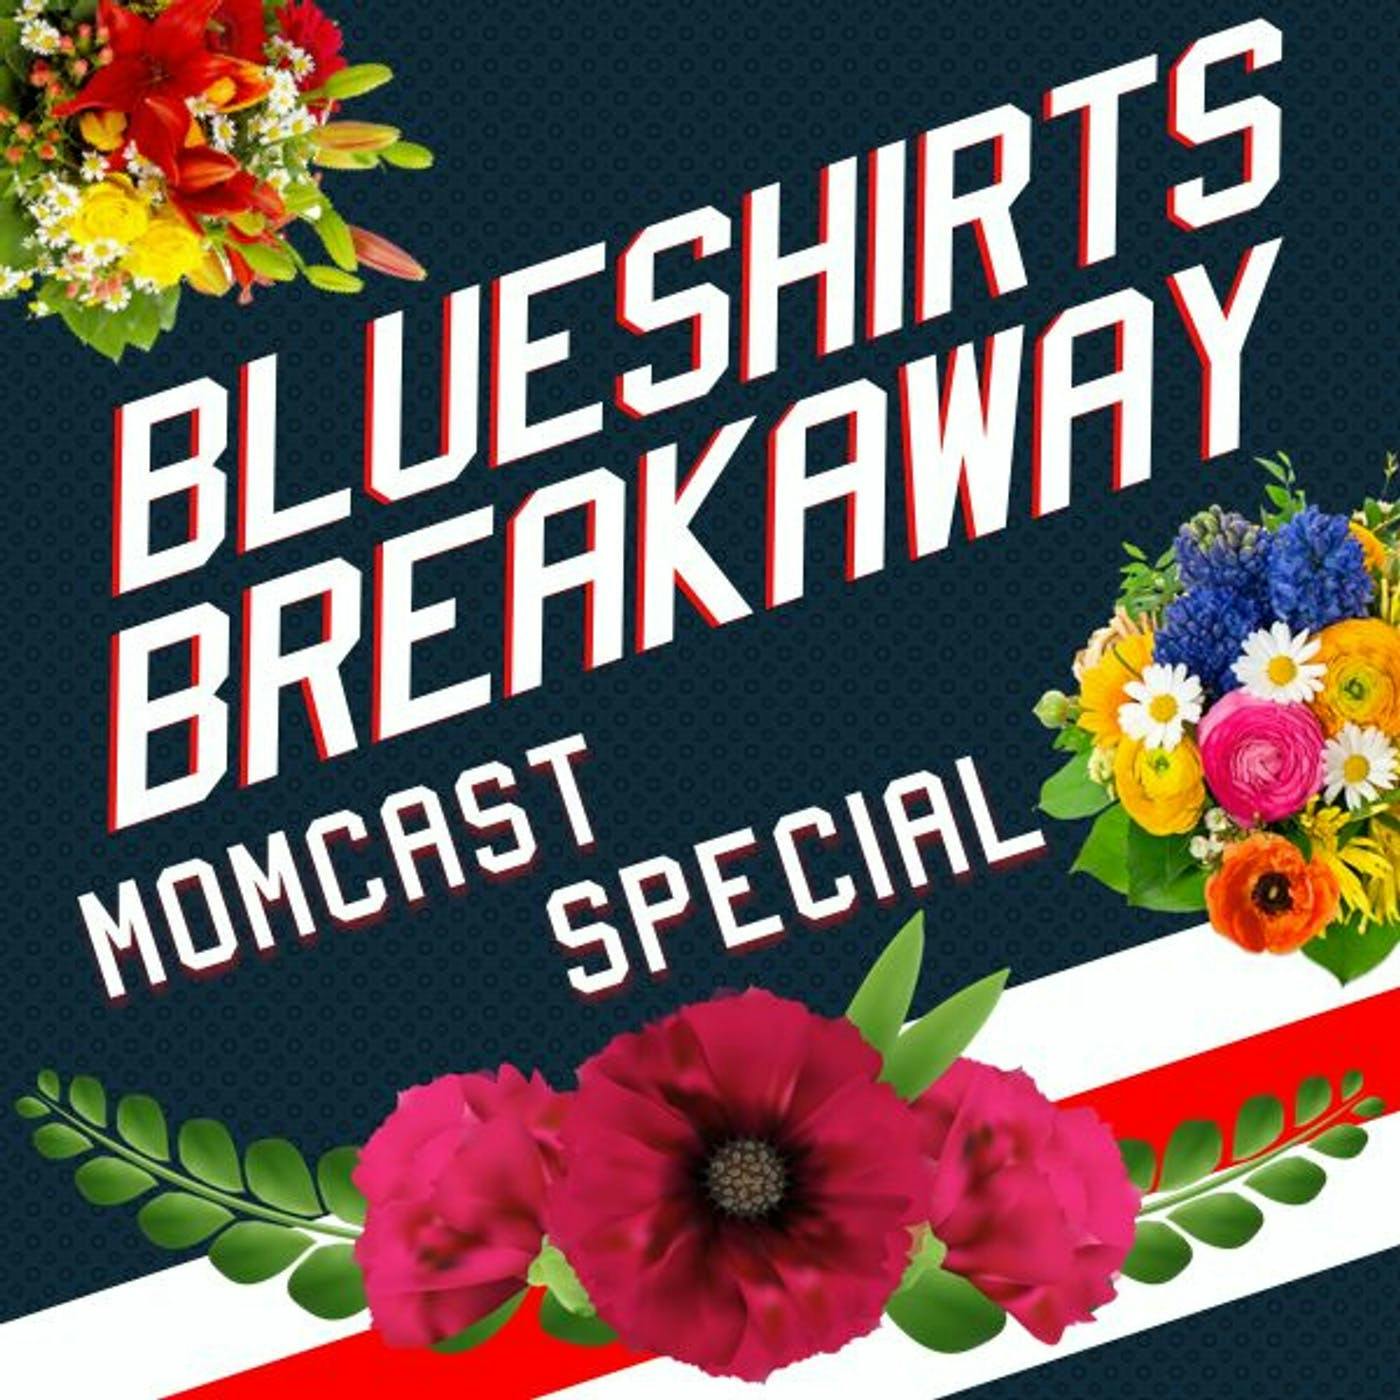 Blueshirts Breakaway EP 130 - Spooner's Spot & Mothers Day with Greg & Ryan's Moms - MOMCAST!